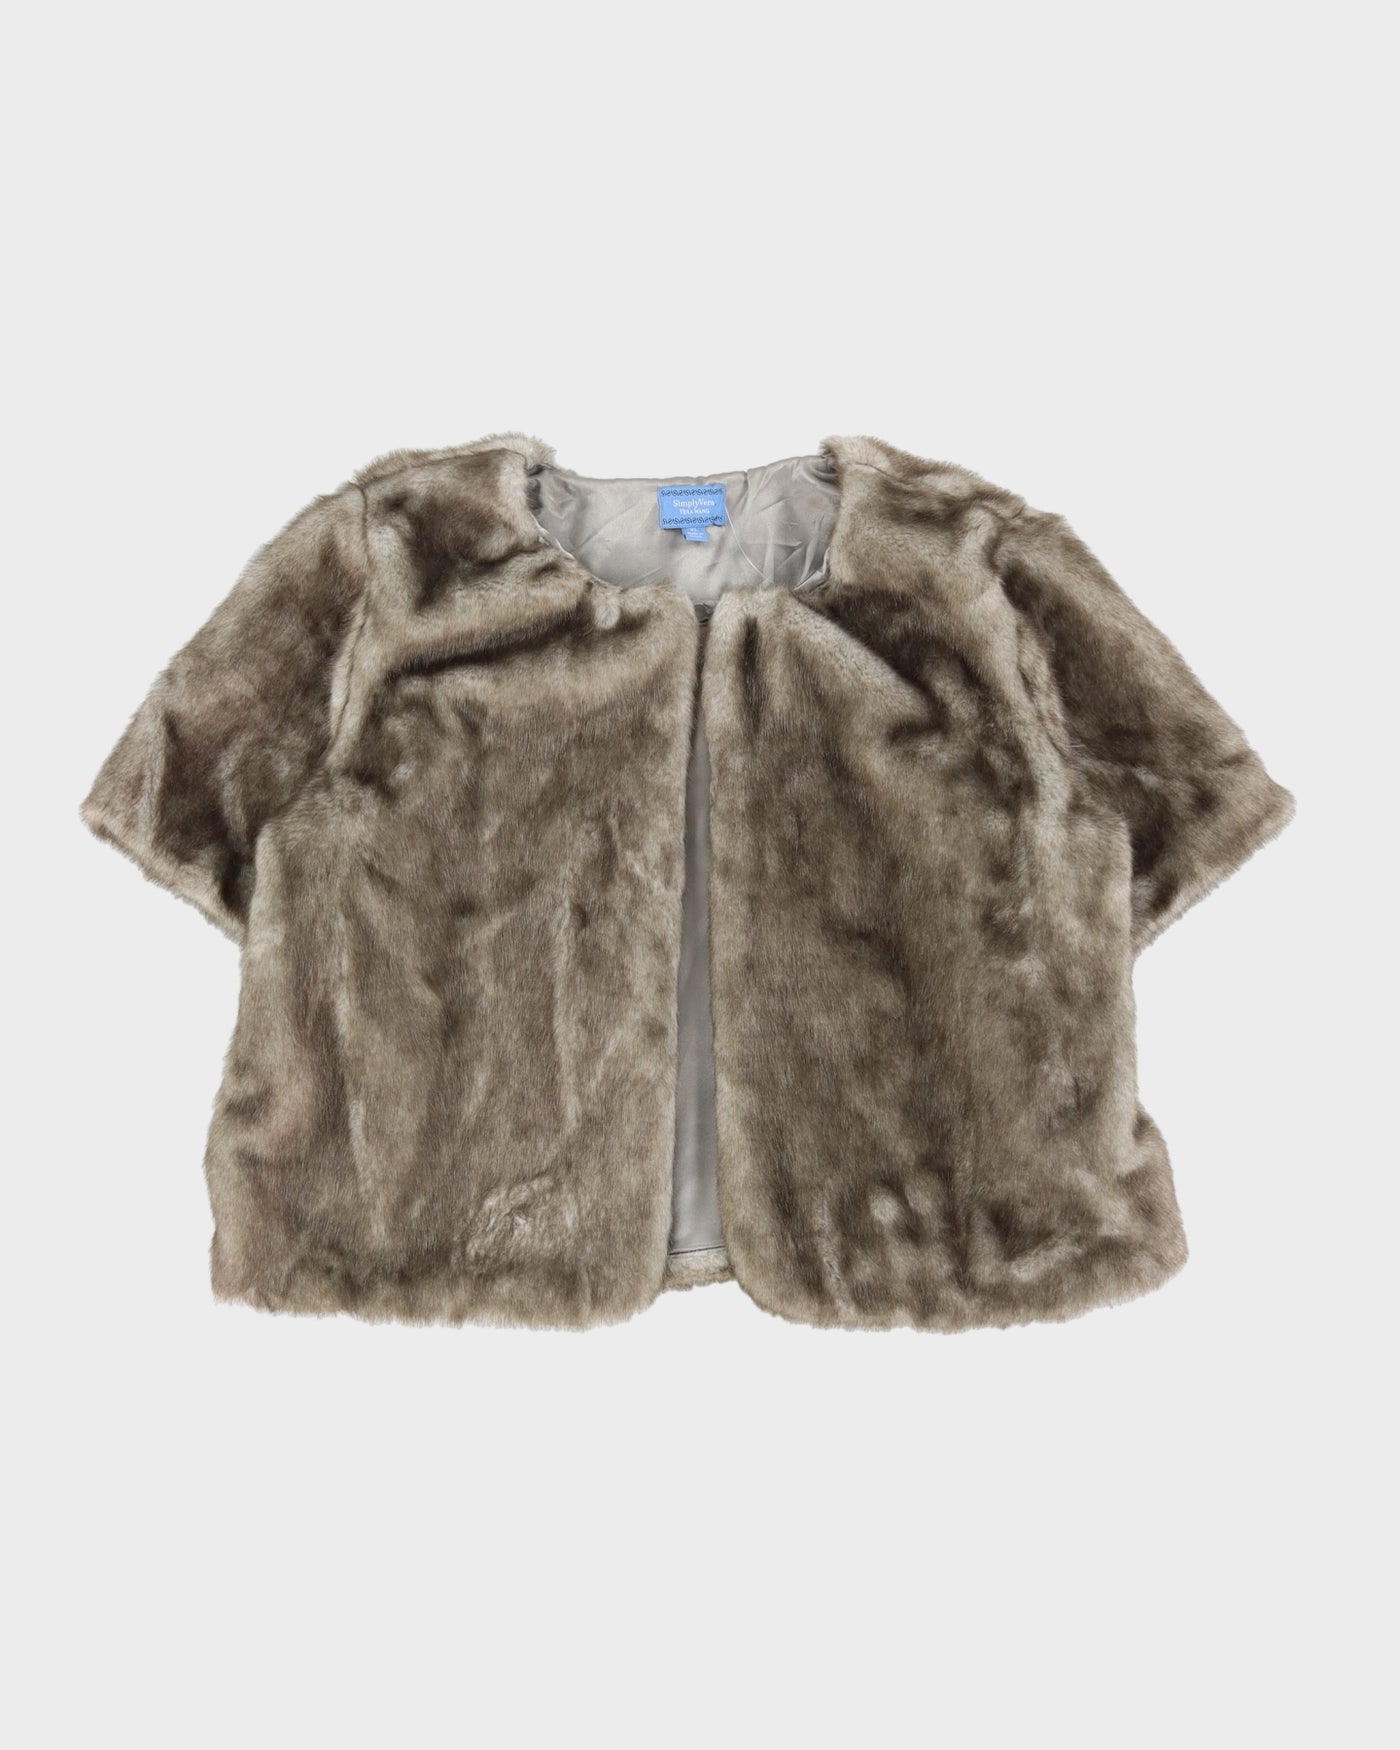 Simply Vera Wang Grey Faux Fur Jacket - XL